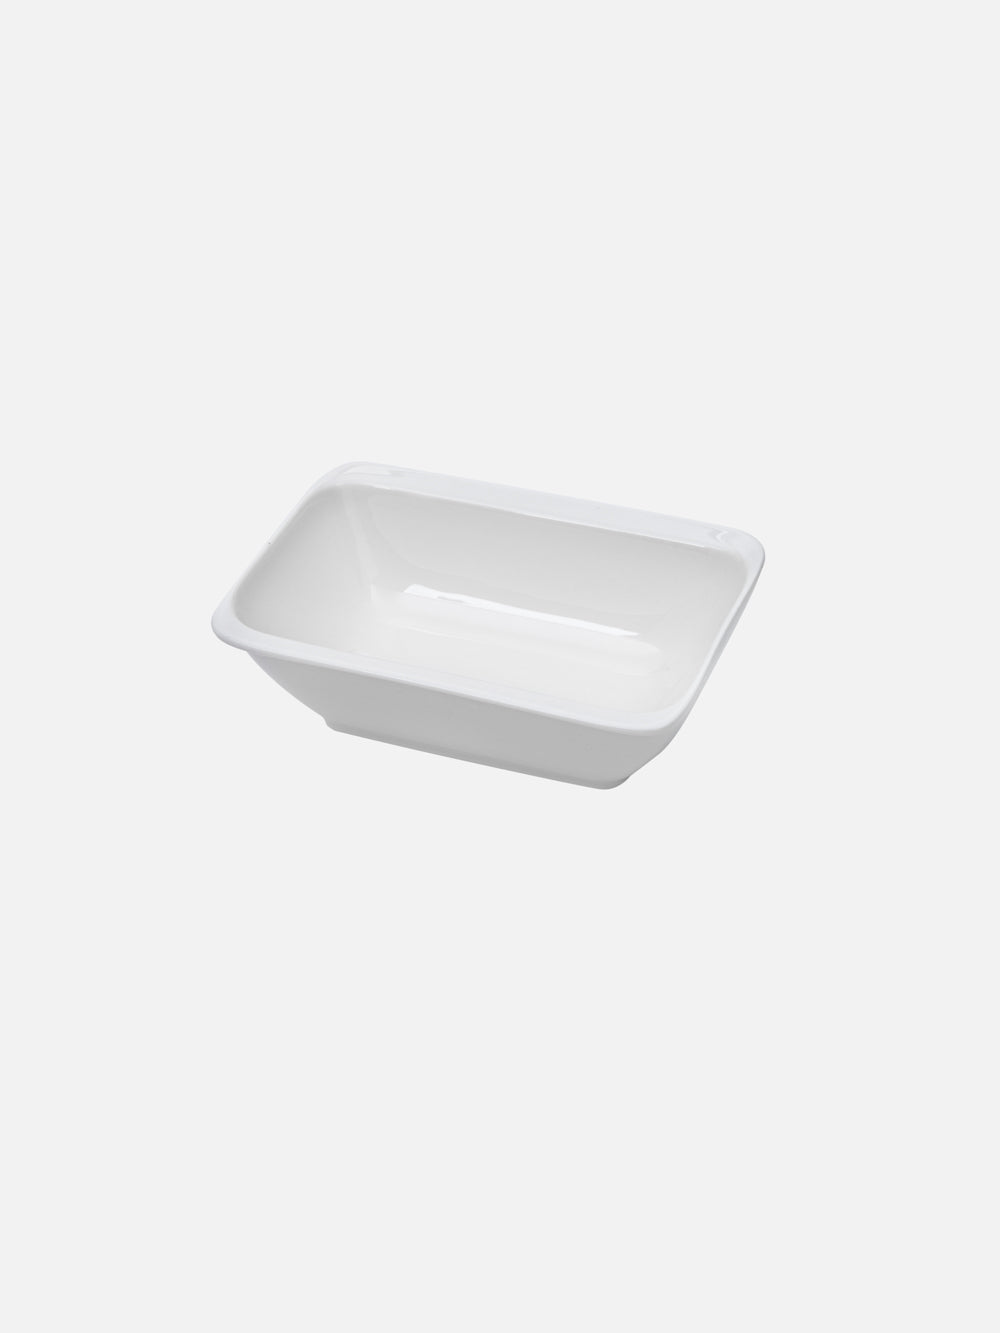 White porcelain square serving bowl